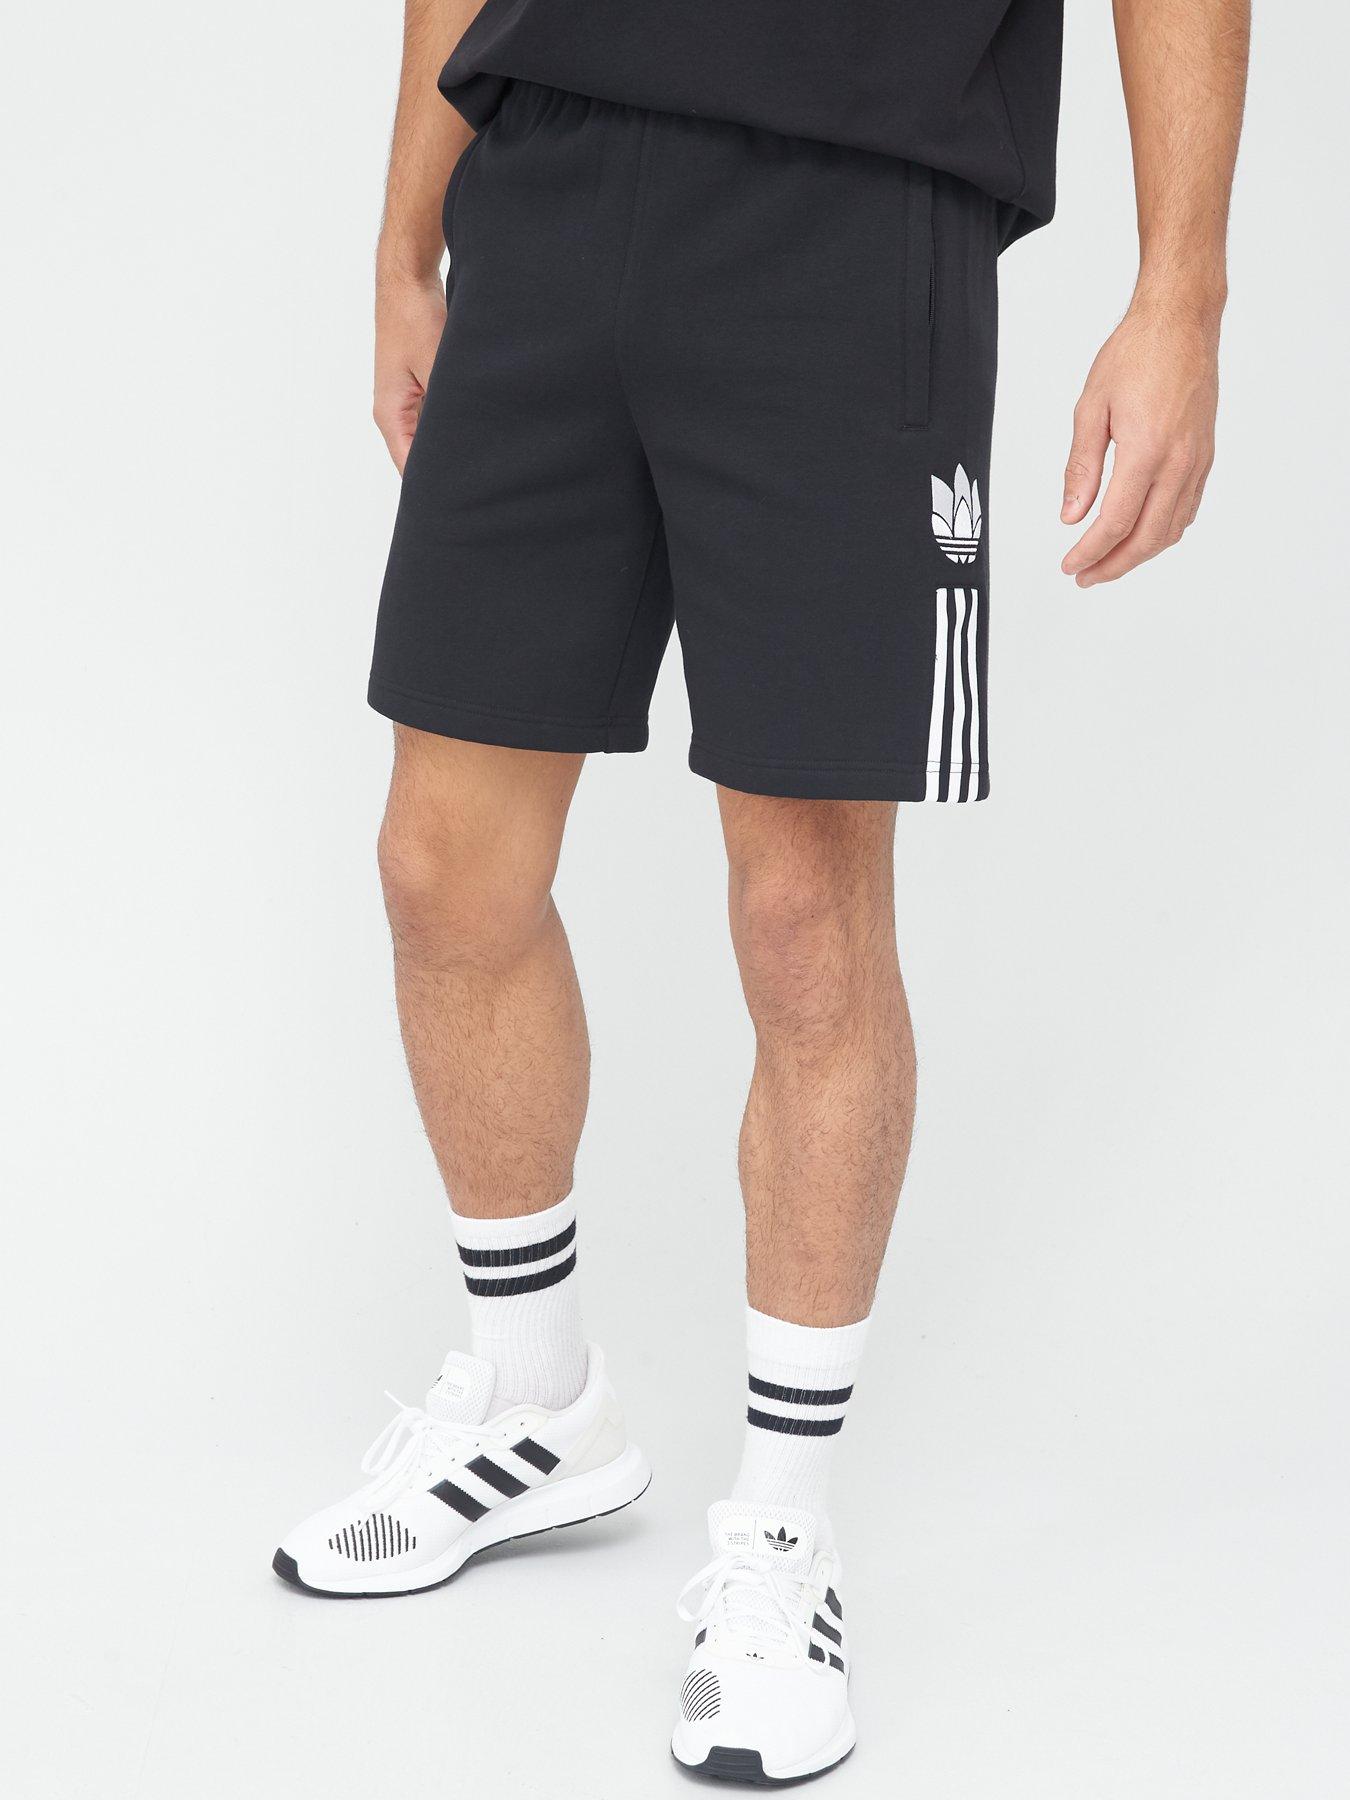 very adidas shorts